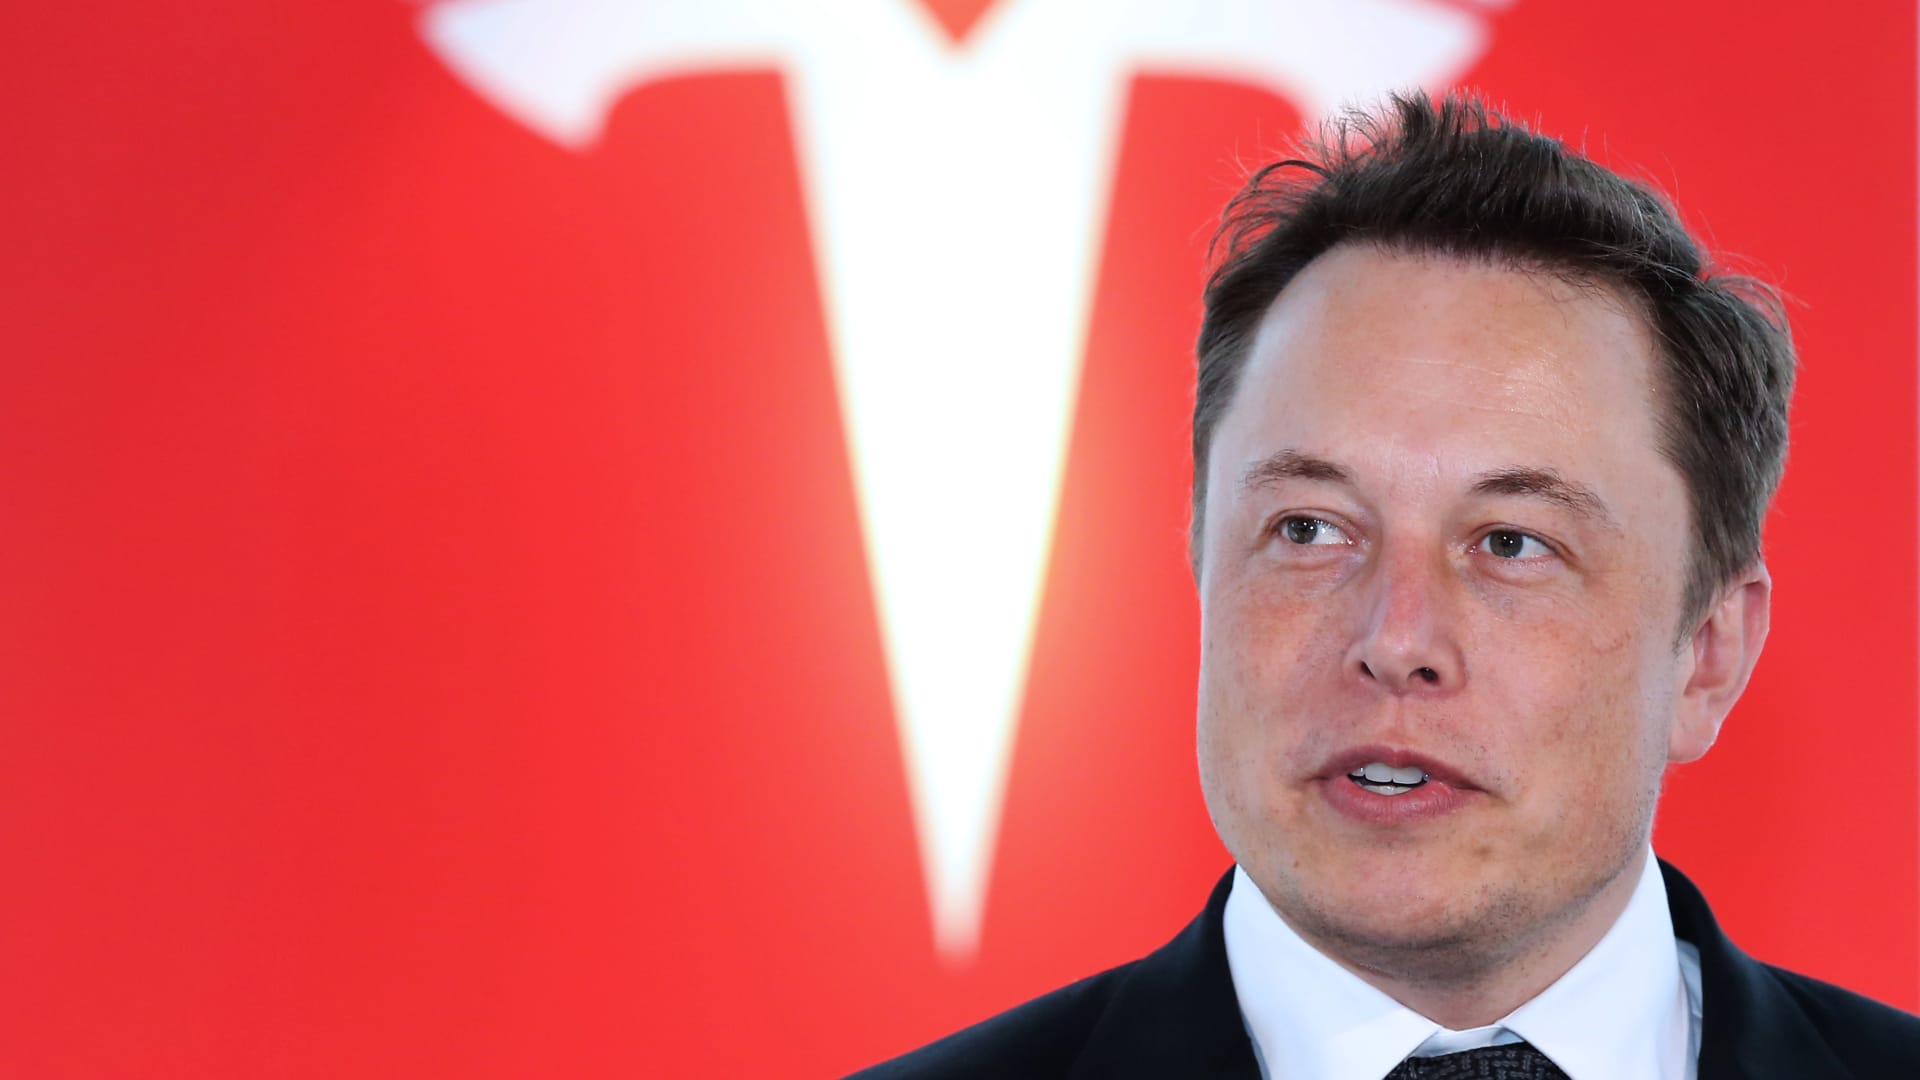 Tesla boss Elon Musk blasts Biden, Democrats on Twitter